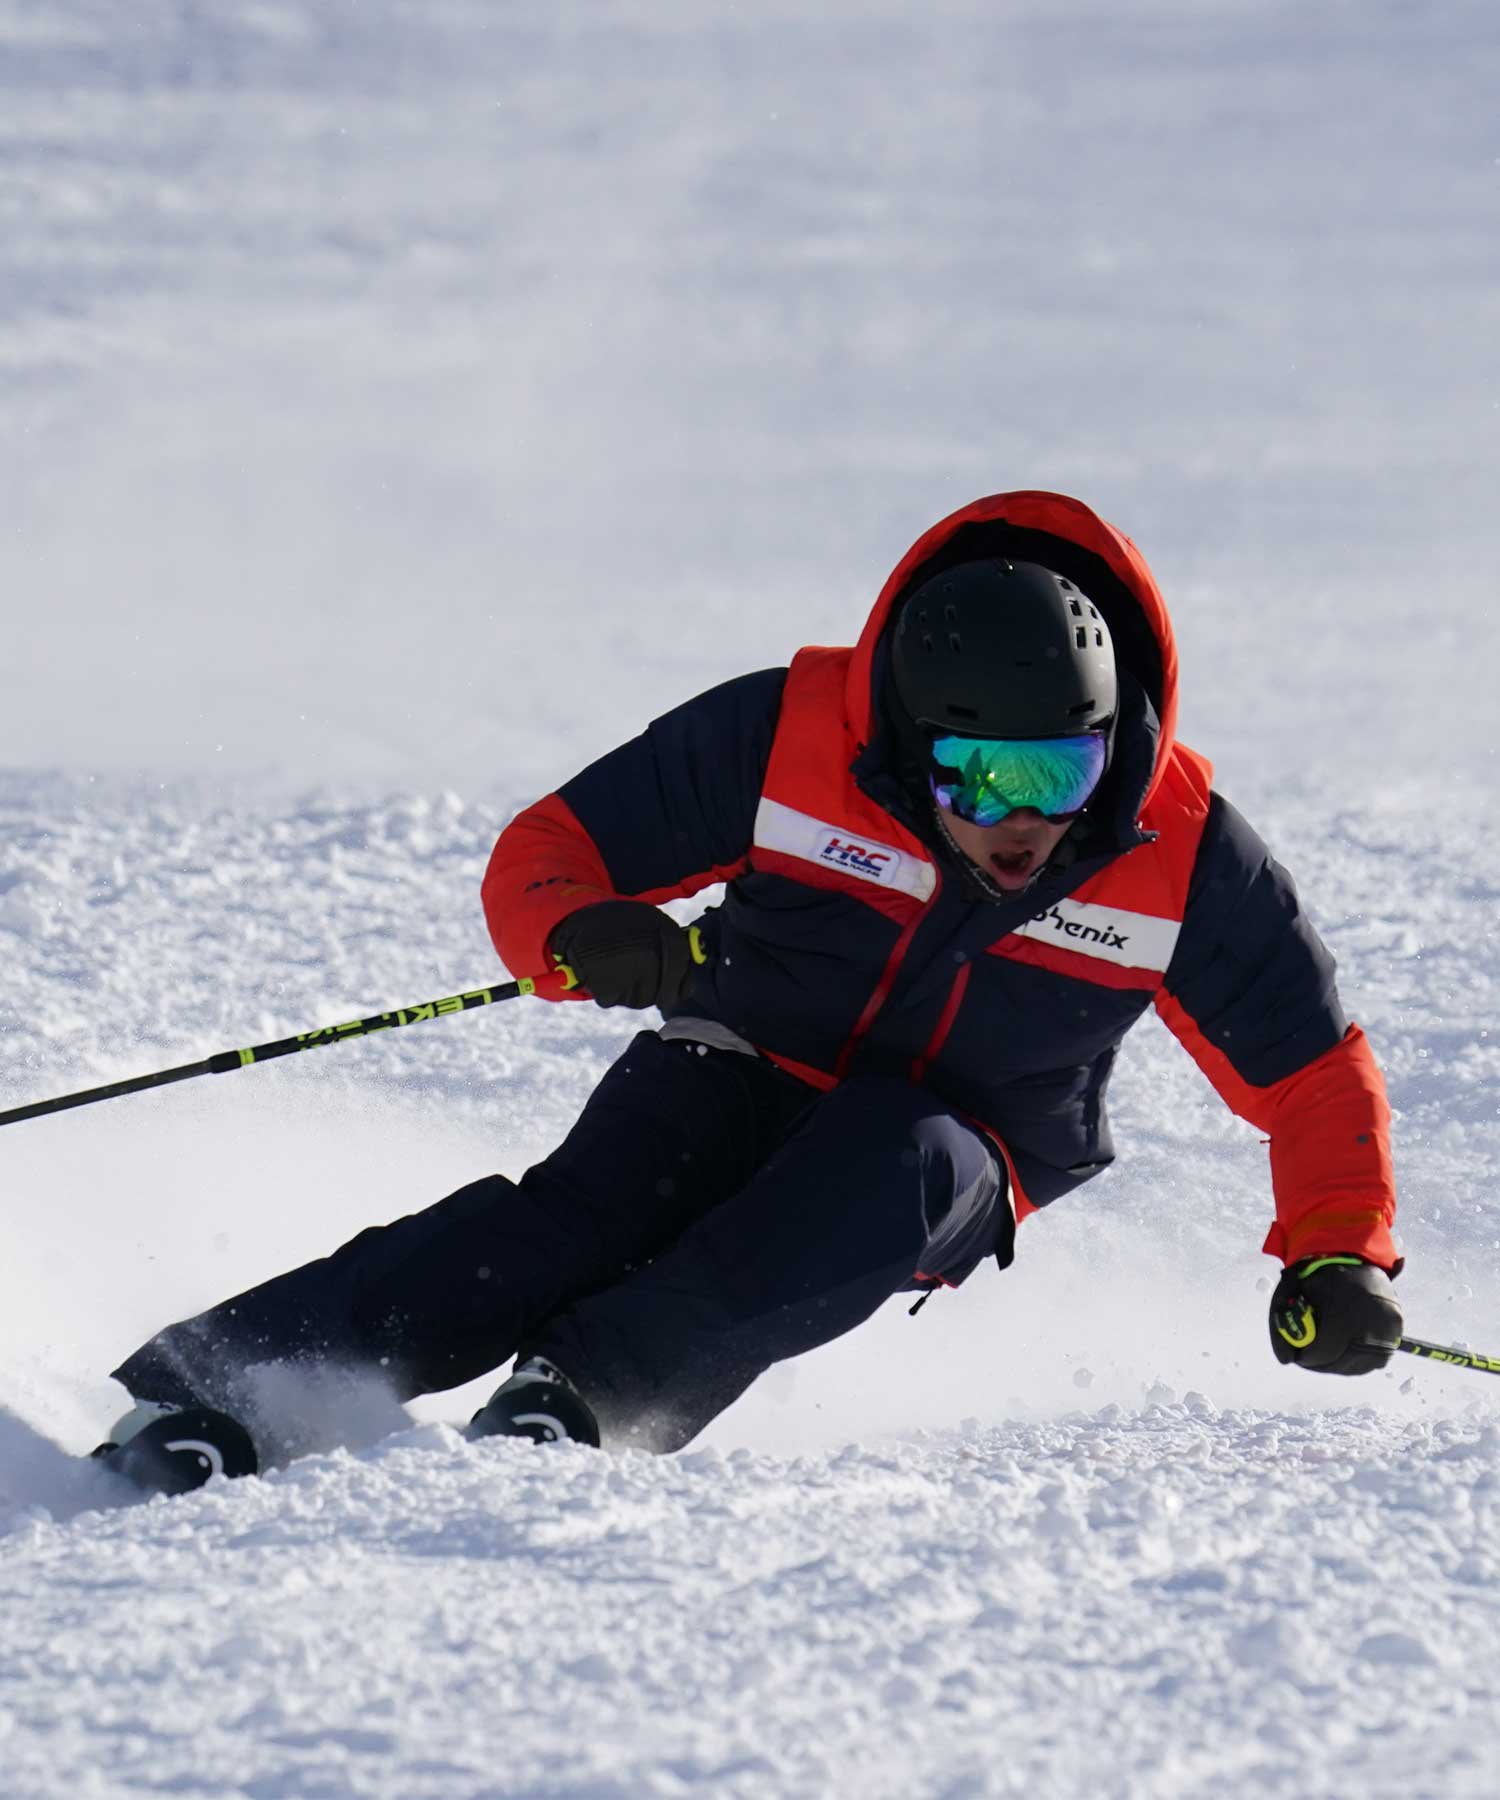 phenix フェニックス スキー アルペン ハーフパンツ 競技 - スキー